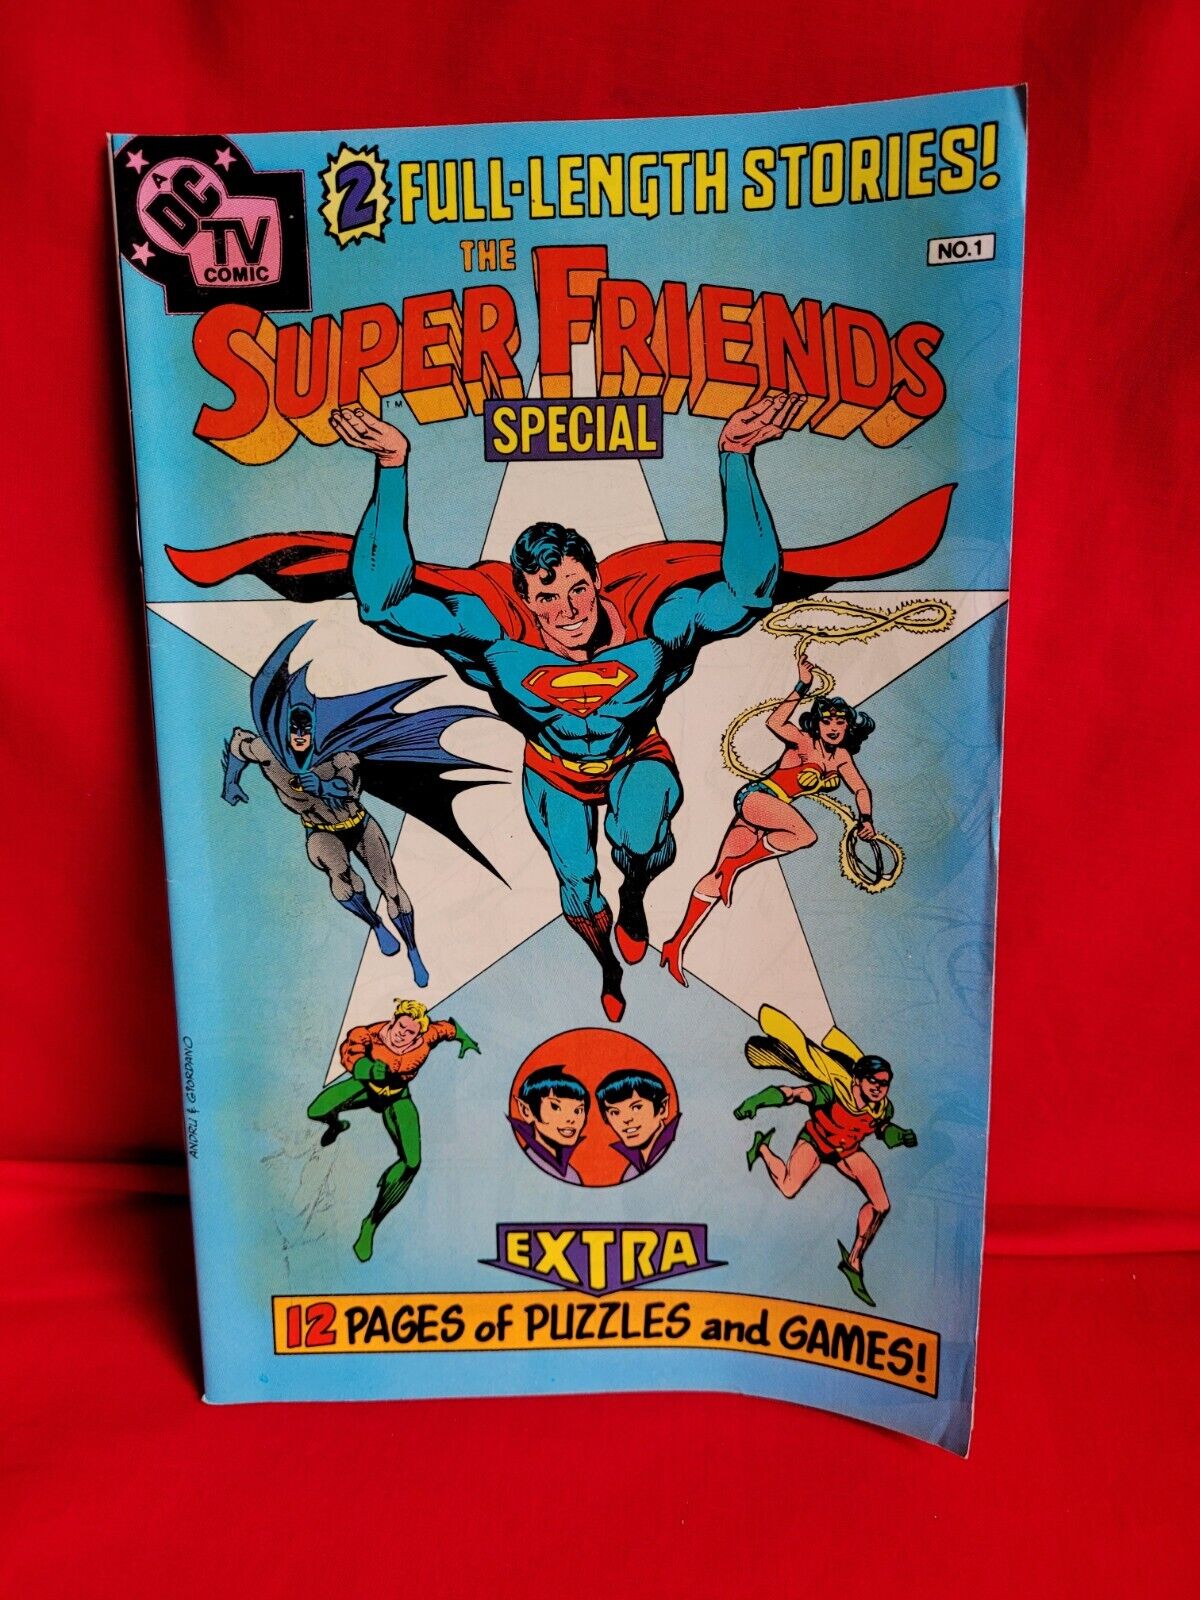 VINTAGE DC COMICS THE SUPER FRIENDS SPECIAL NO. 1 COMIC BOOK STORE PROMO 1981